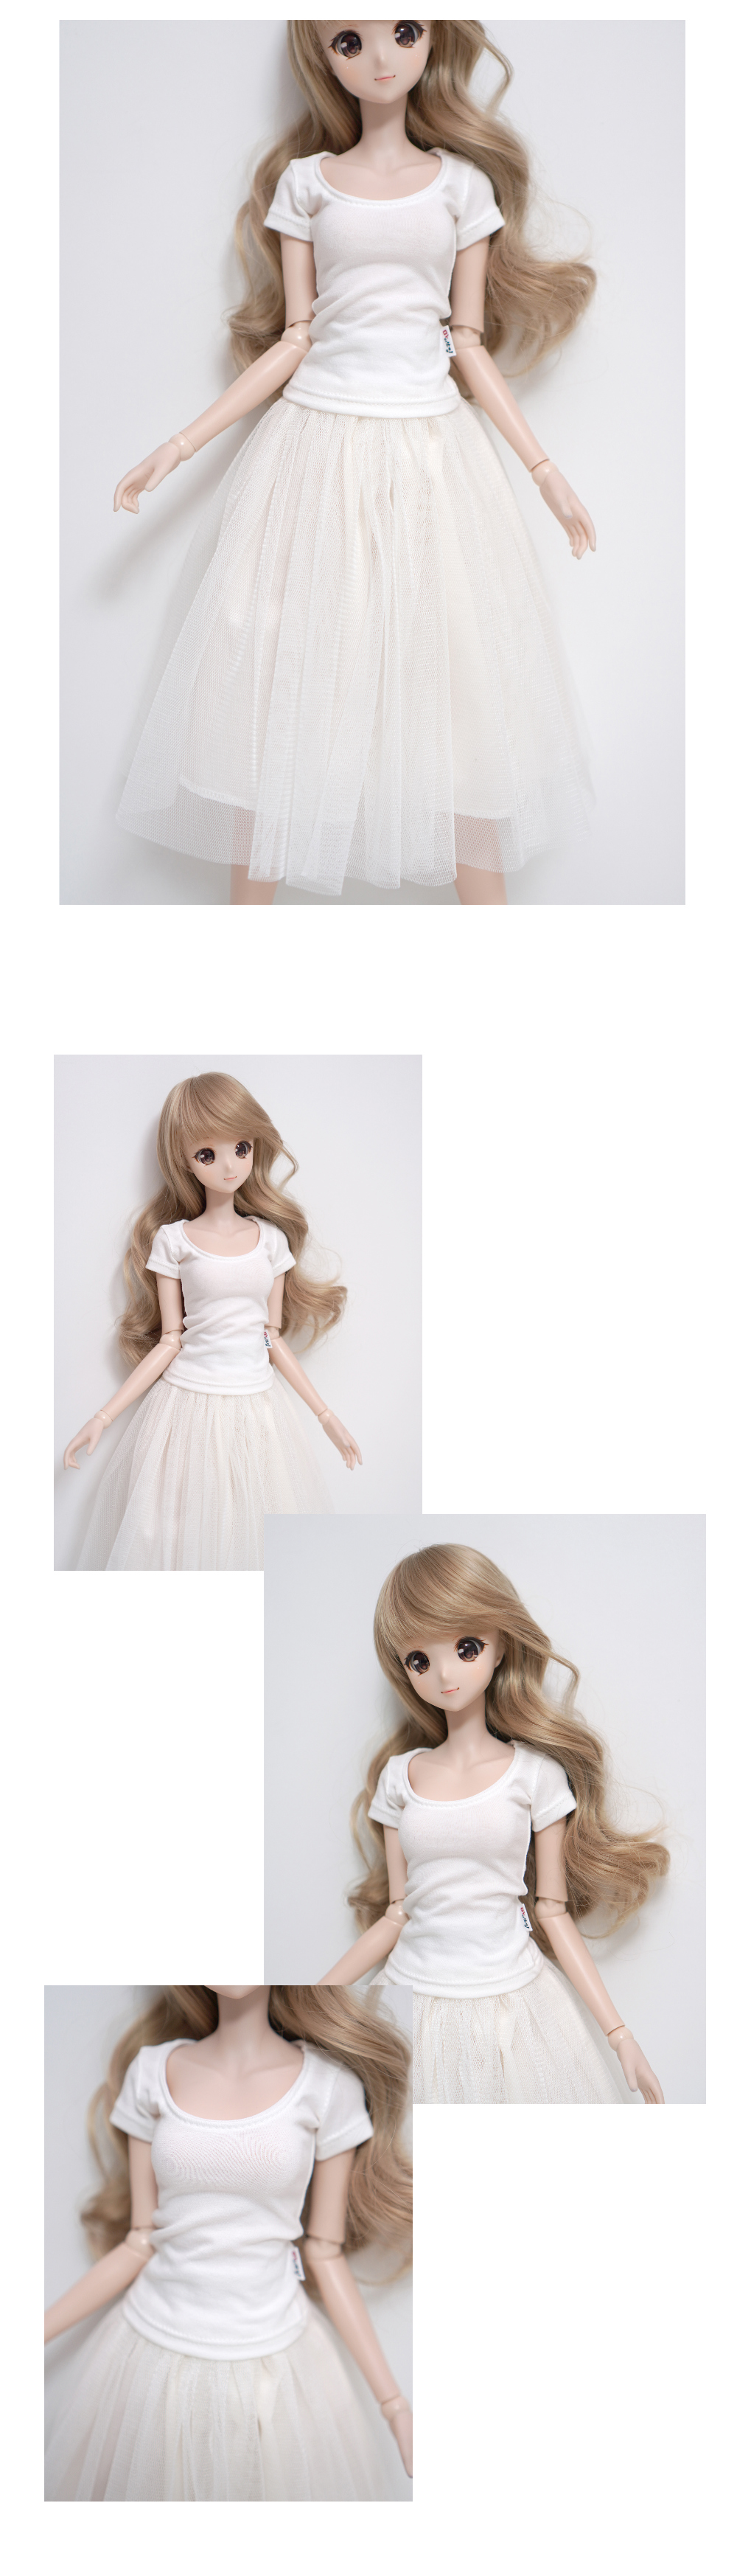 dress model image-S2L12